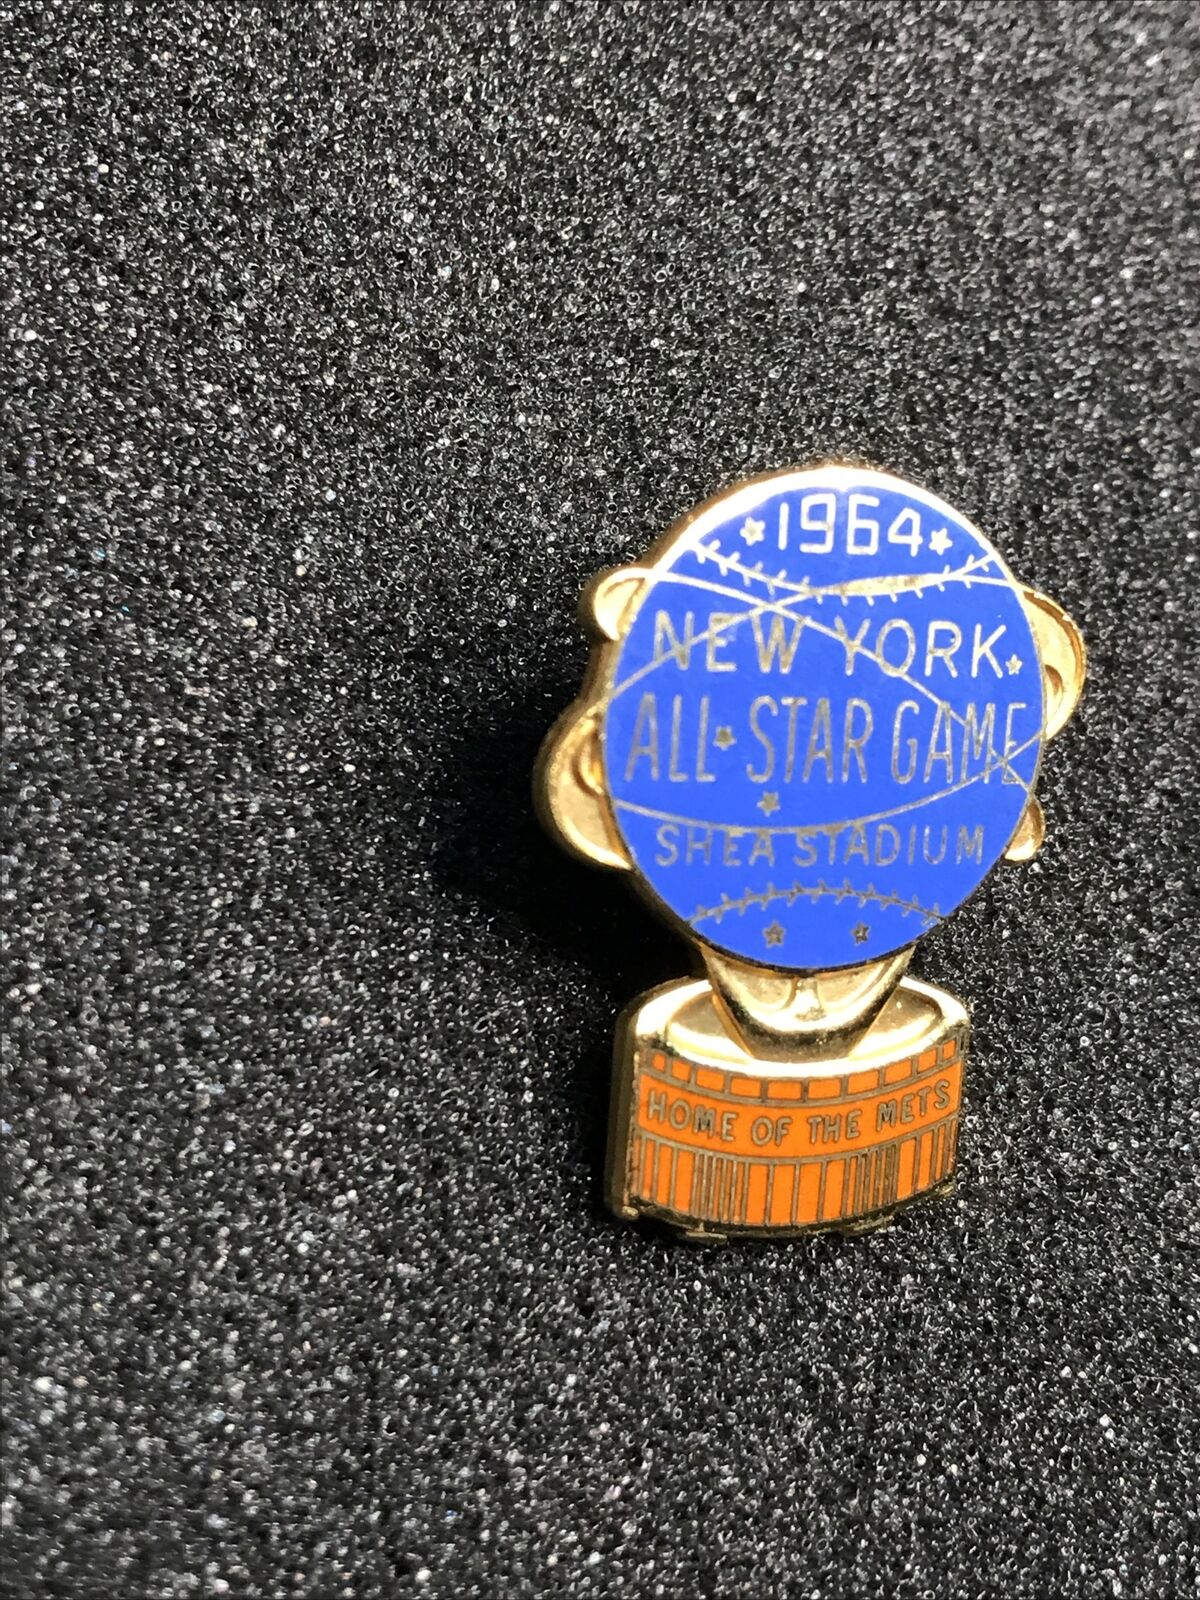 1964 Baseball All Star Game Press Pin New York Mets Shea Stadium Button Charm